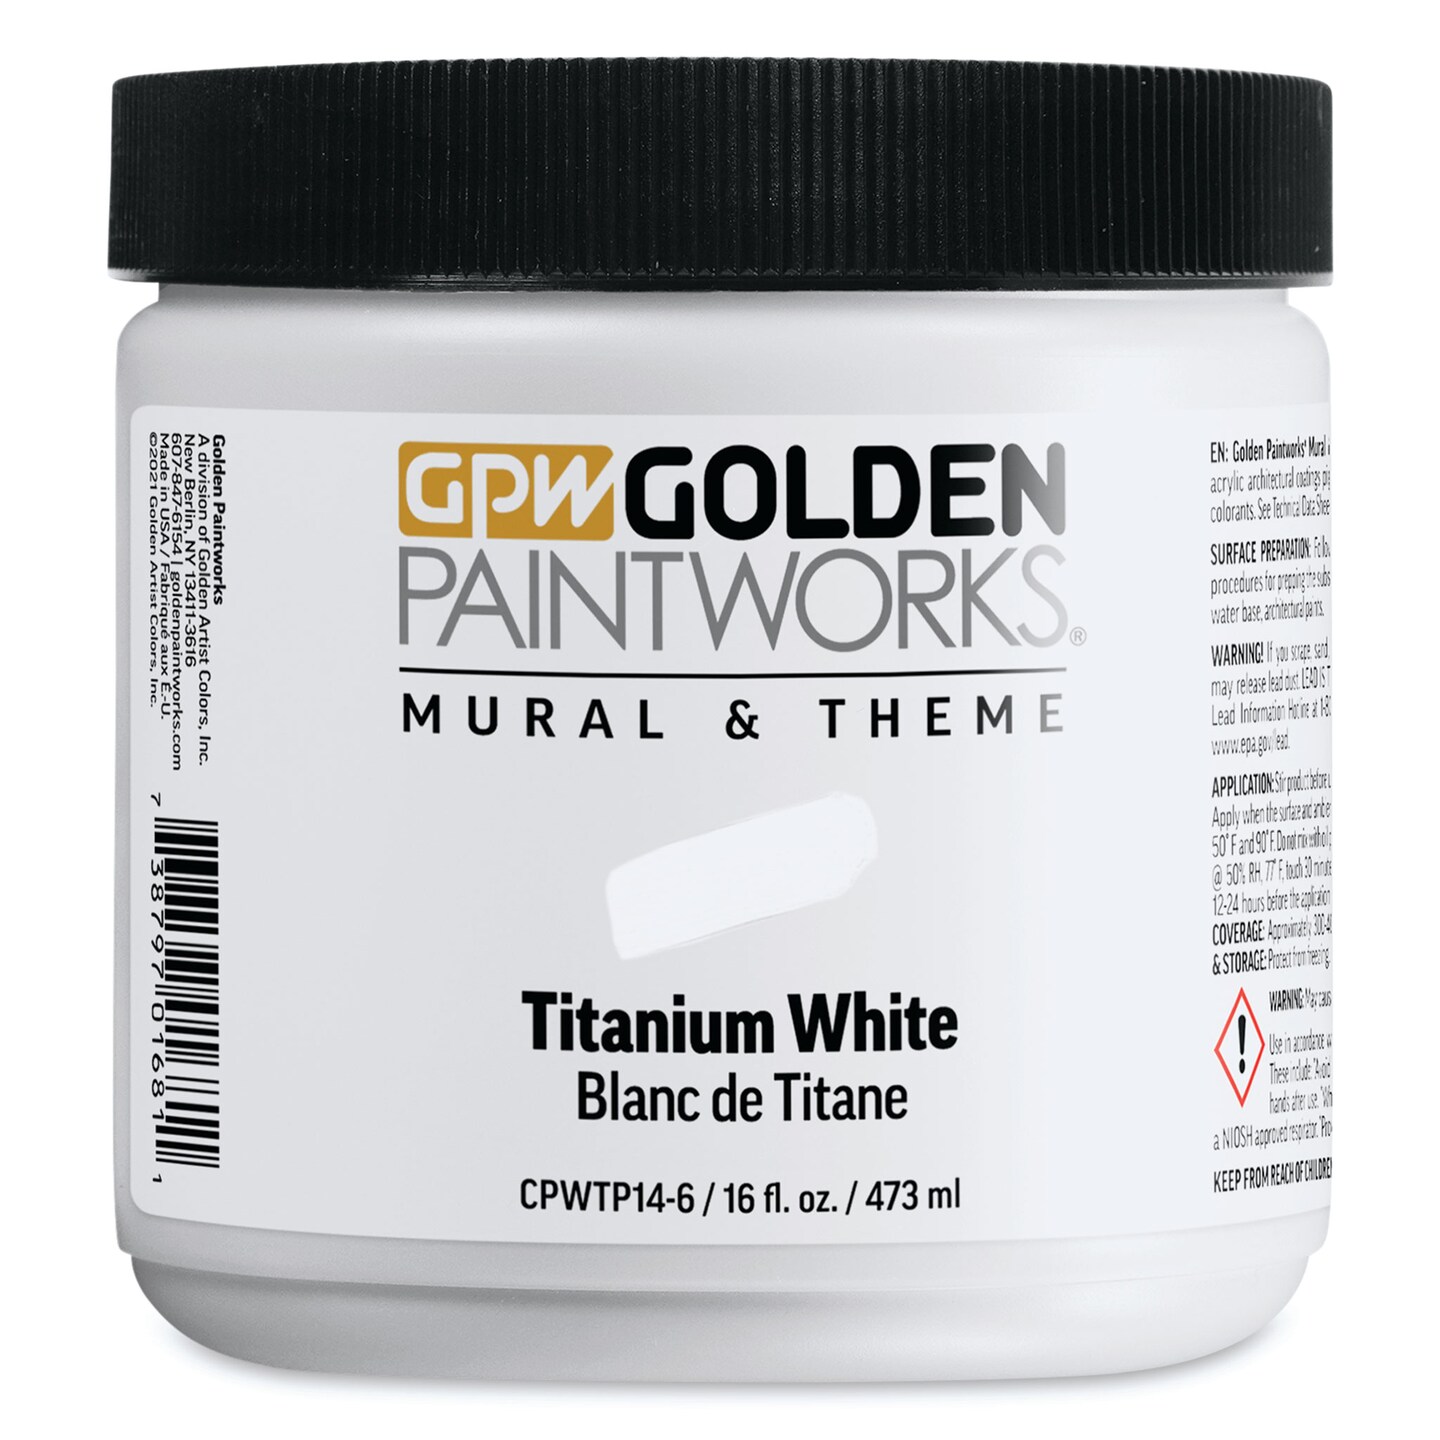 Golden Paintworks Mural and Theme Acrylic Paint - Titanium White, 16 oz, Jar